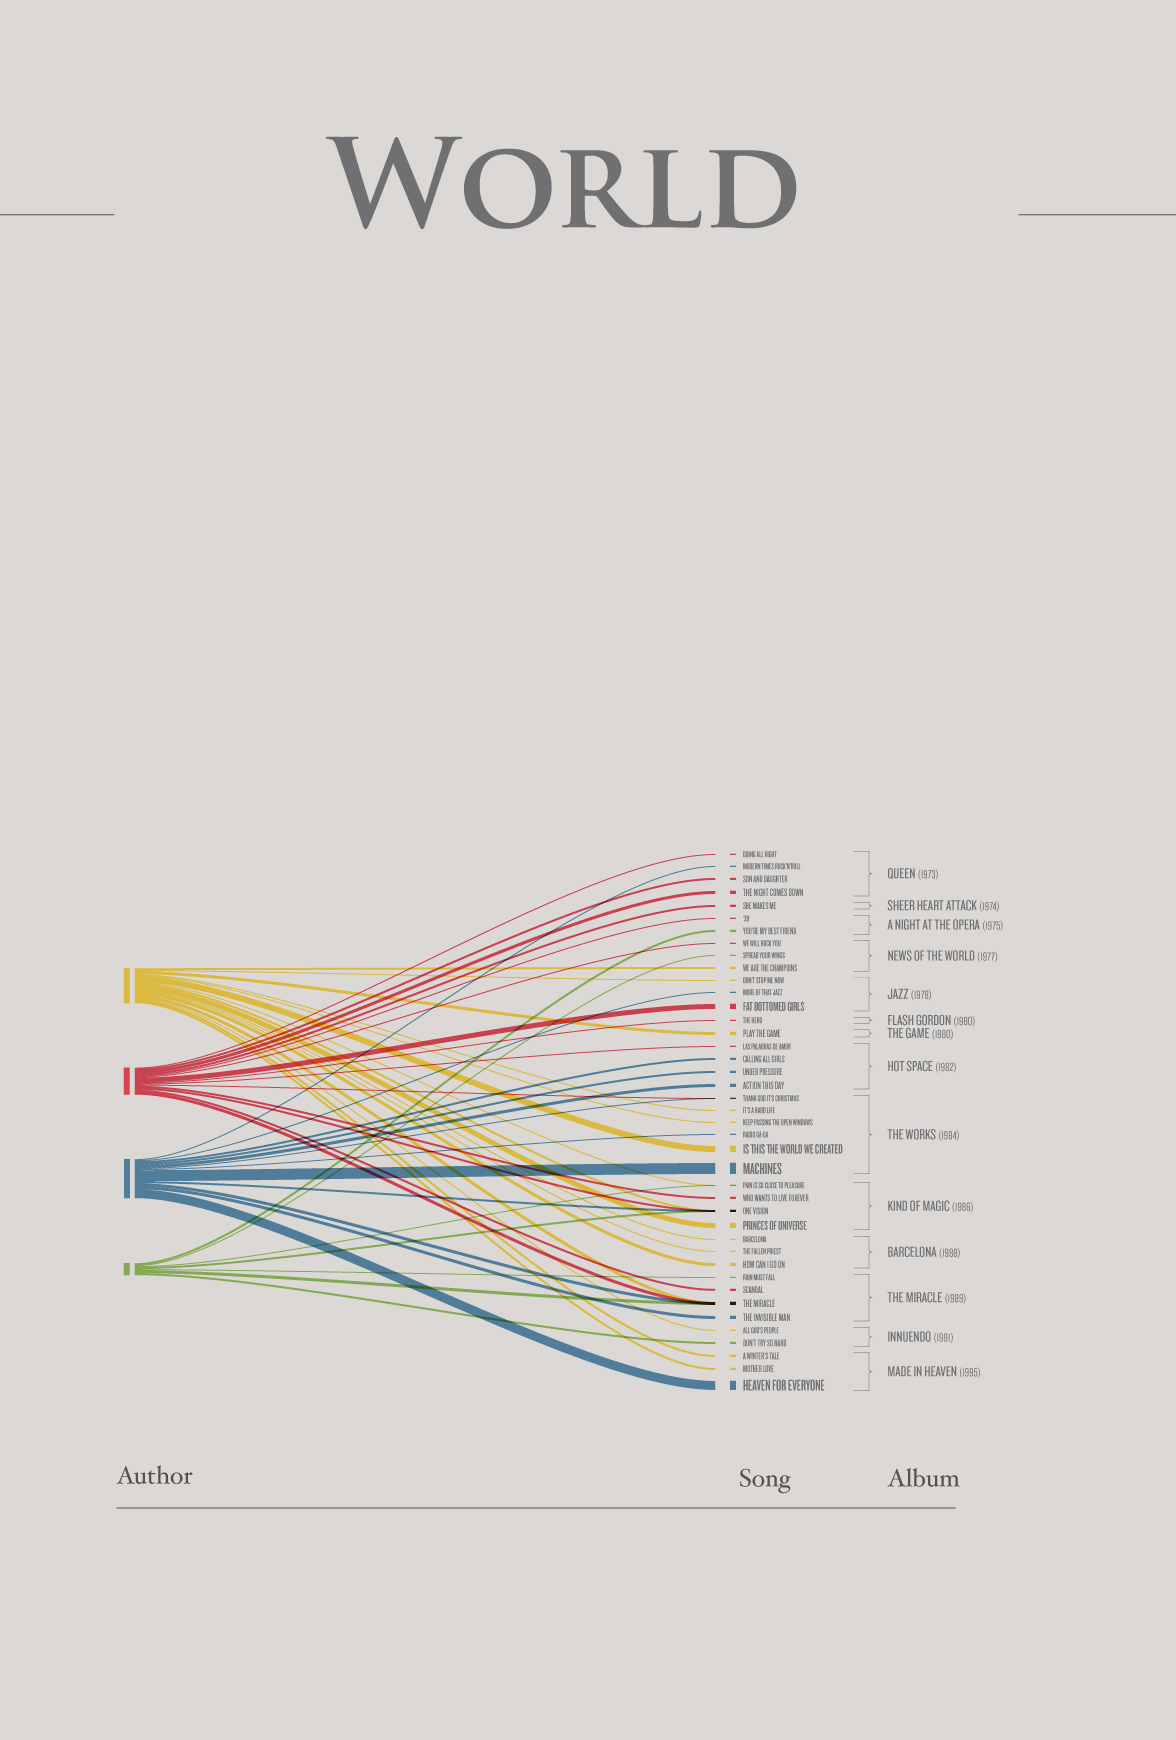 dataflow  visualization infographic Data graphic culture queen Freddie Mercury  graphs information data visualization